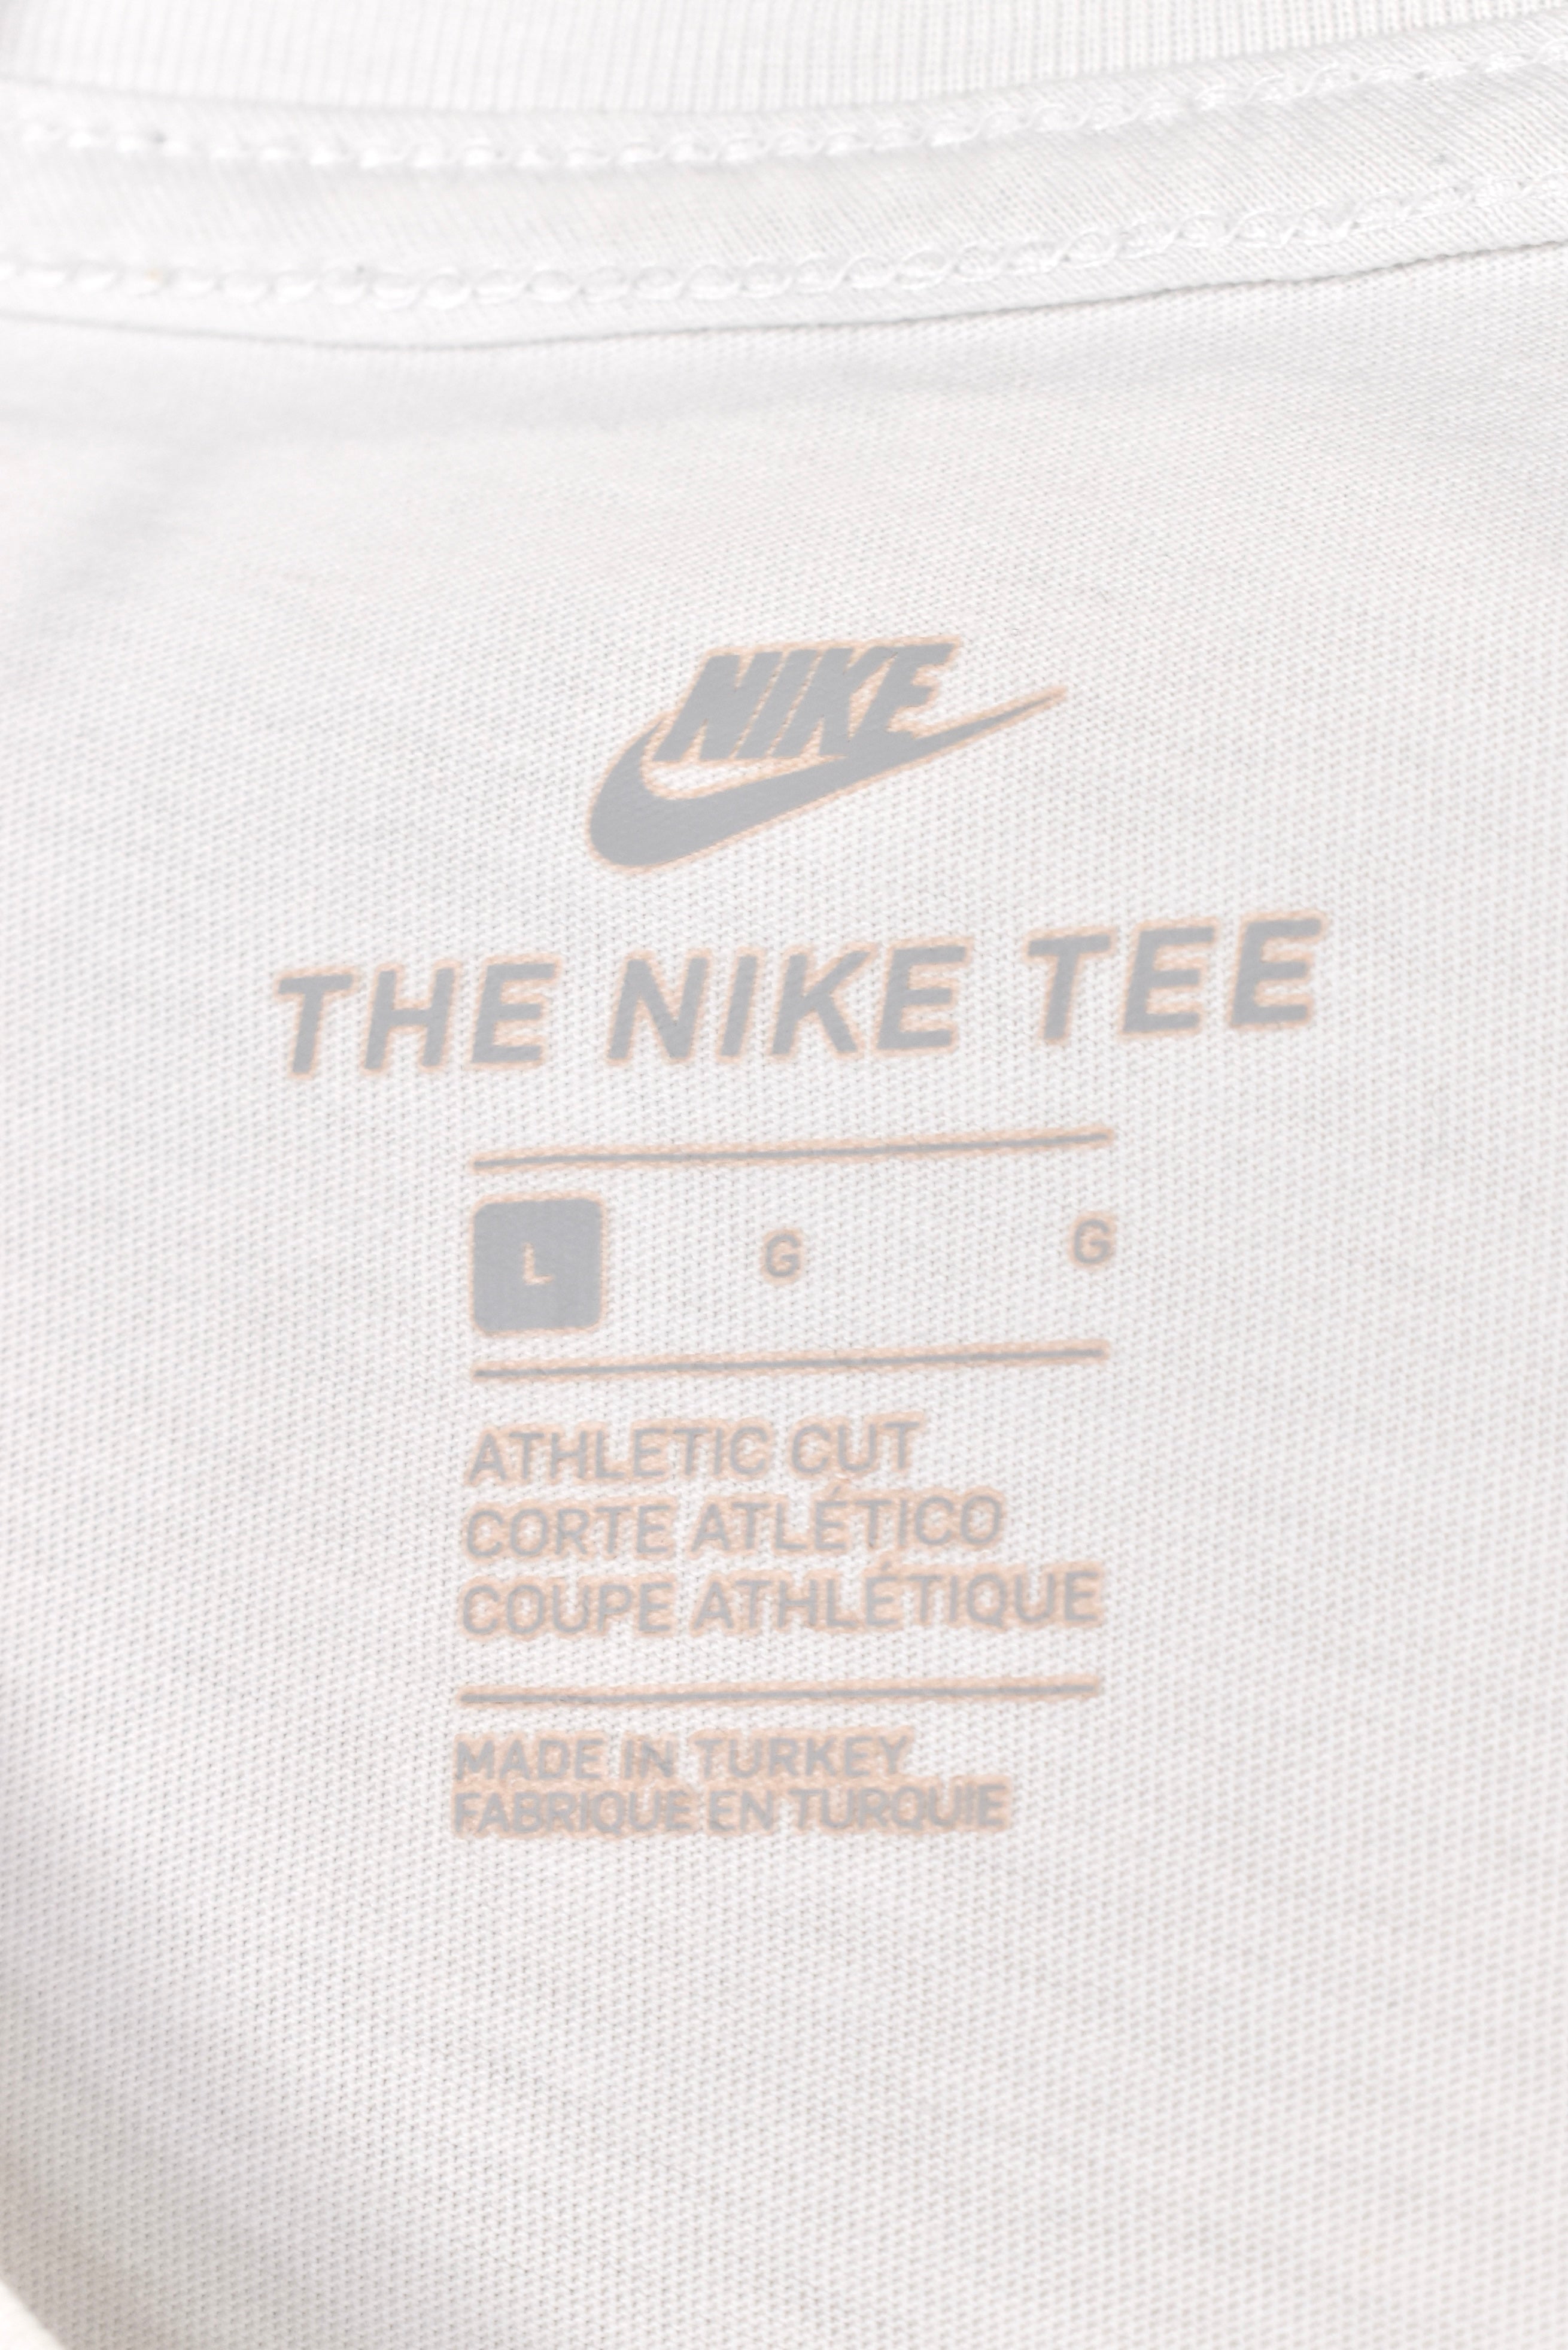 Modern Nike Air shirt, white graphic tee - AU Medium NIKE